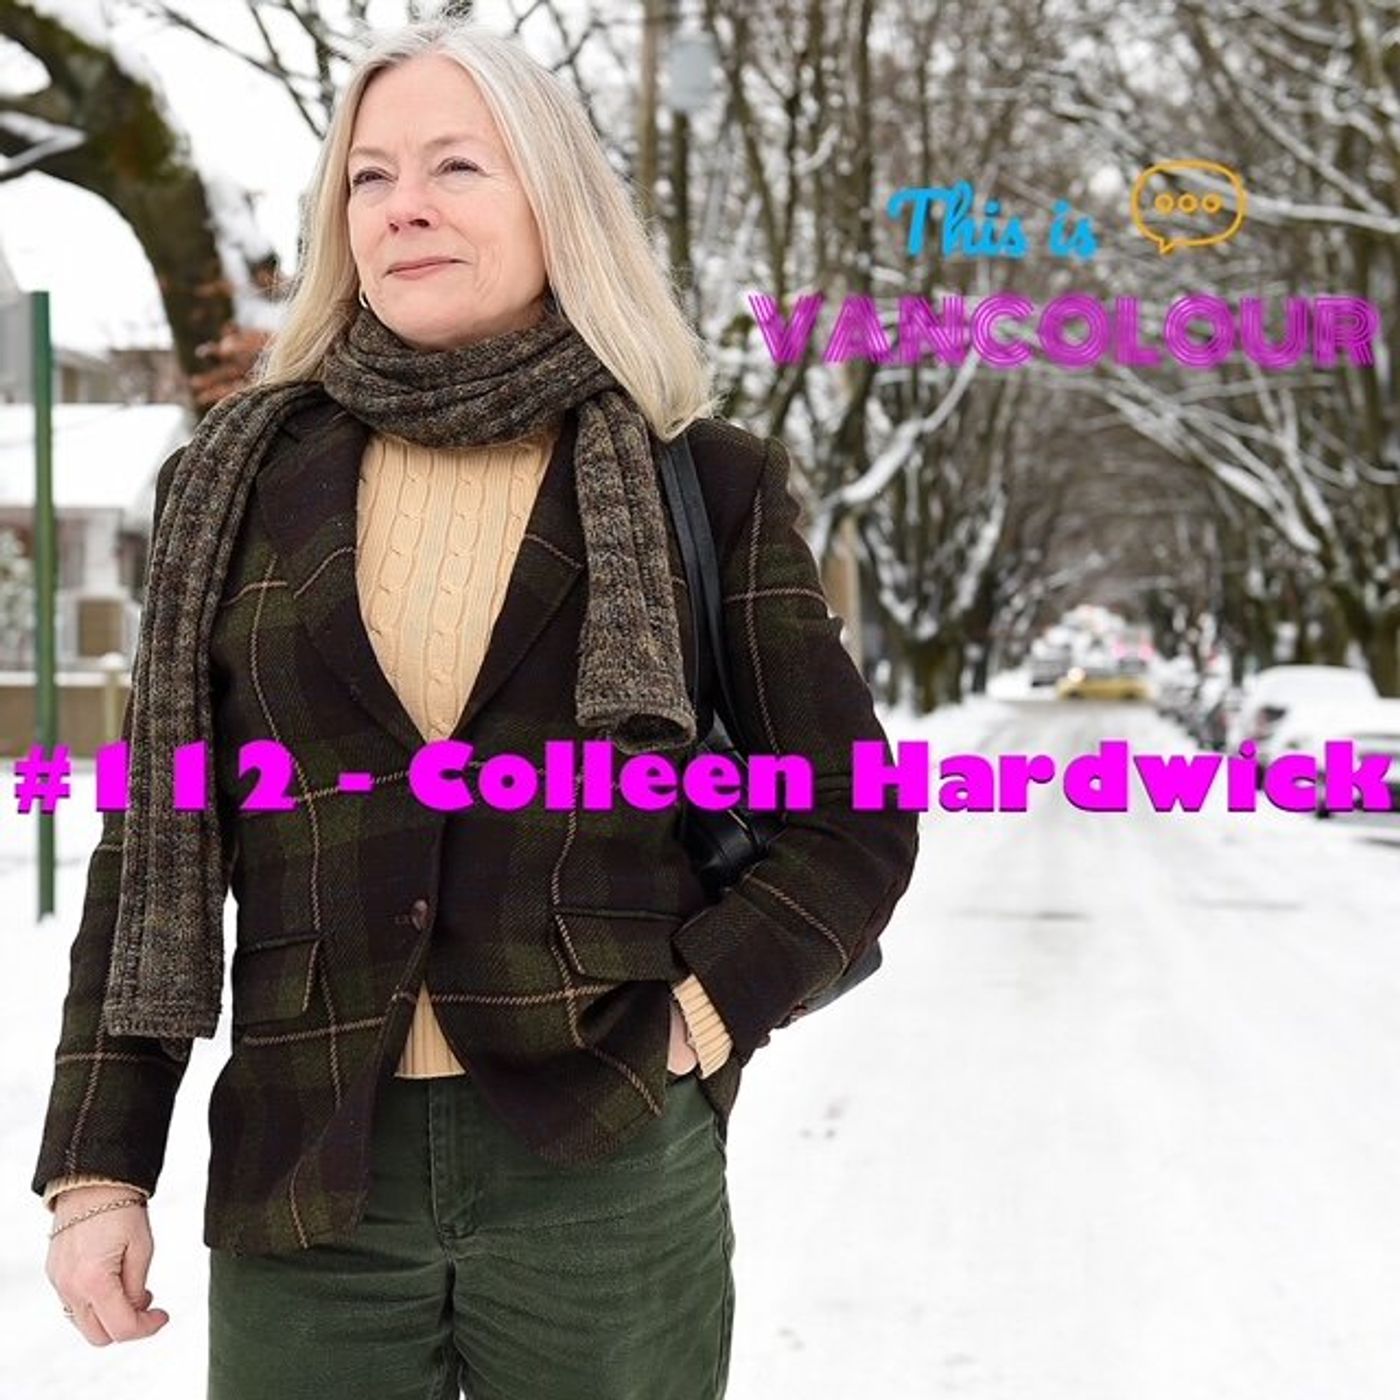 #112 - Colleen Hardwick